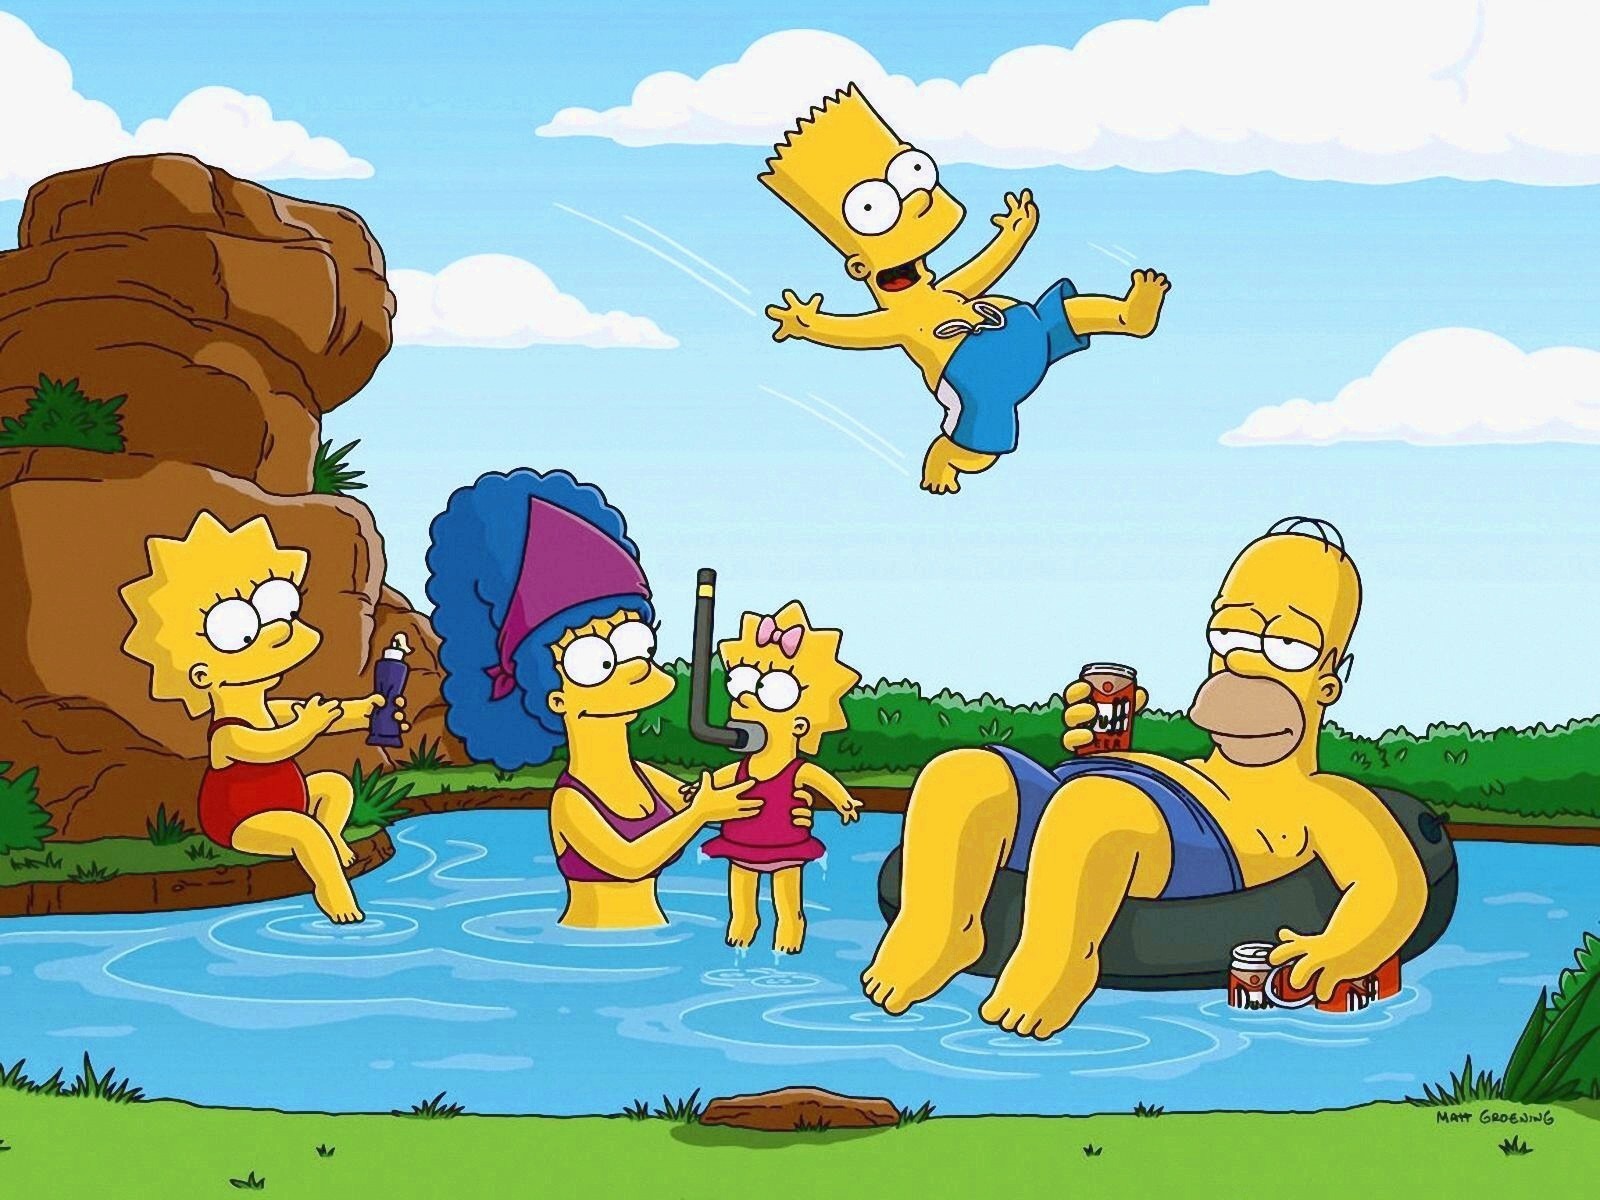 "The Simpsons" desktop wallpaper (1600 x 1200 pixels)